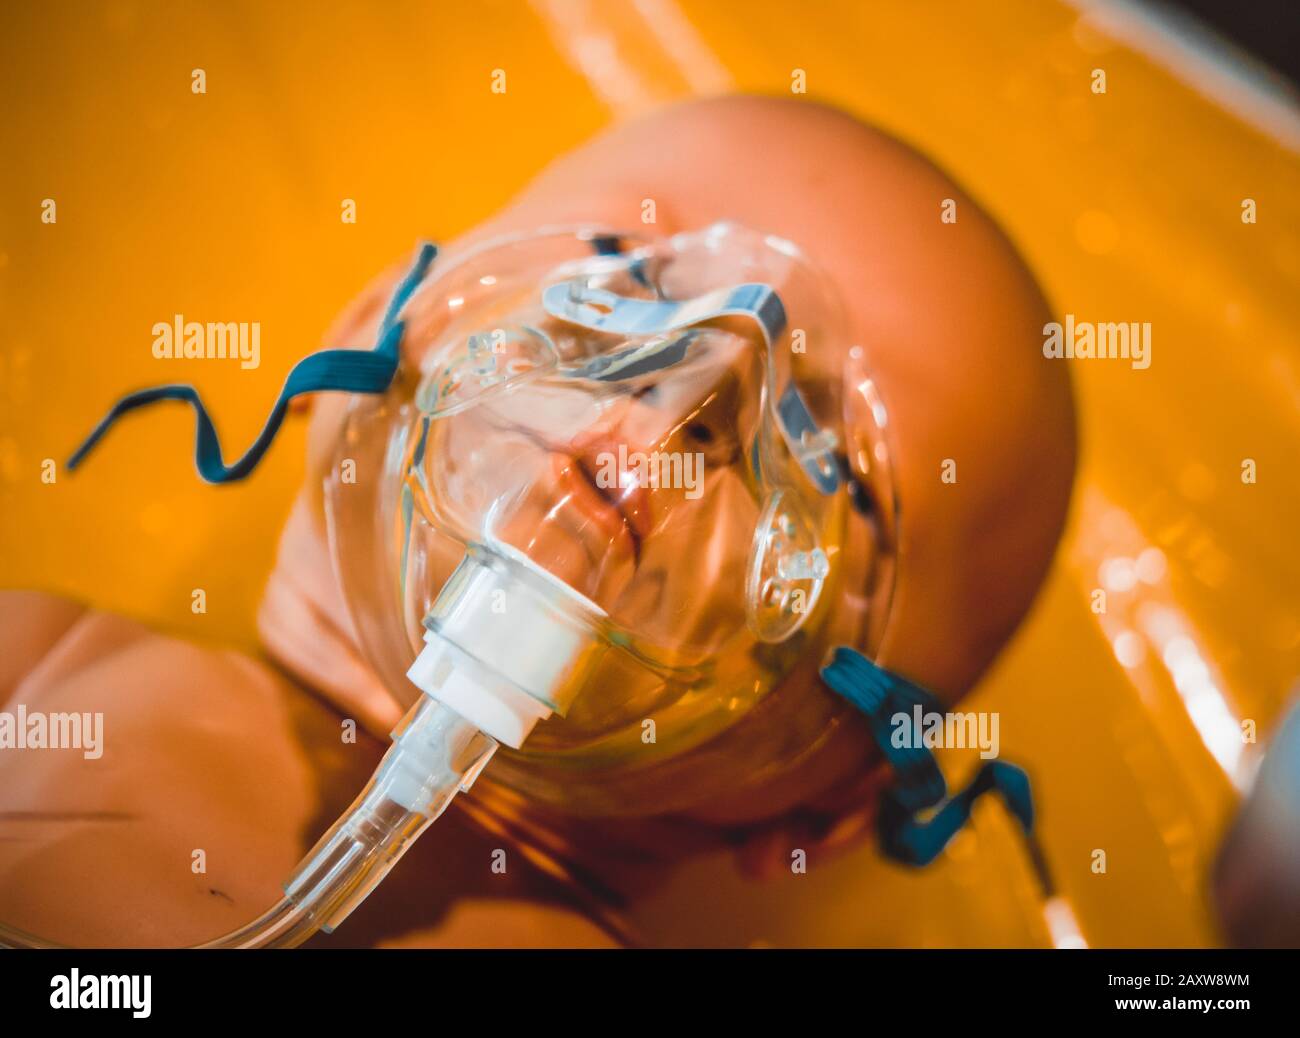 dummy mannequin baby child oxygen mask close-up Stock Photo